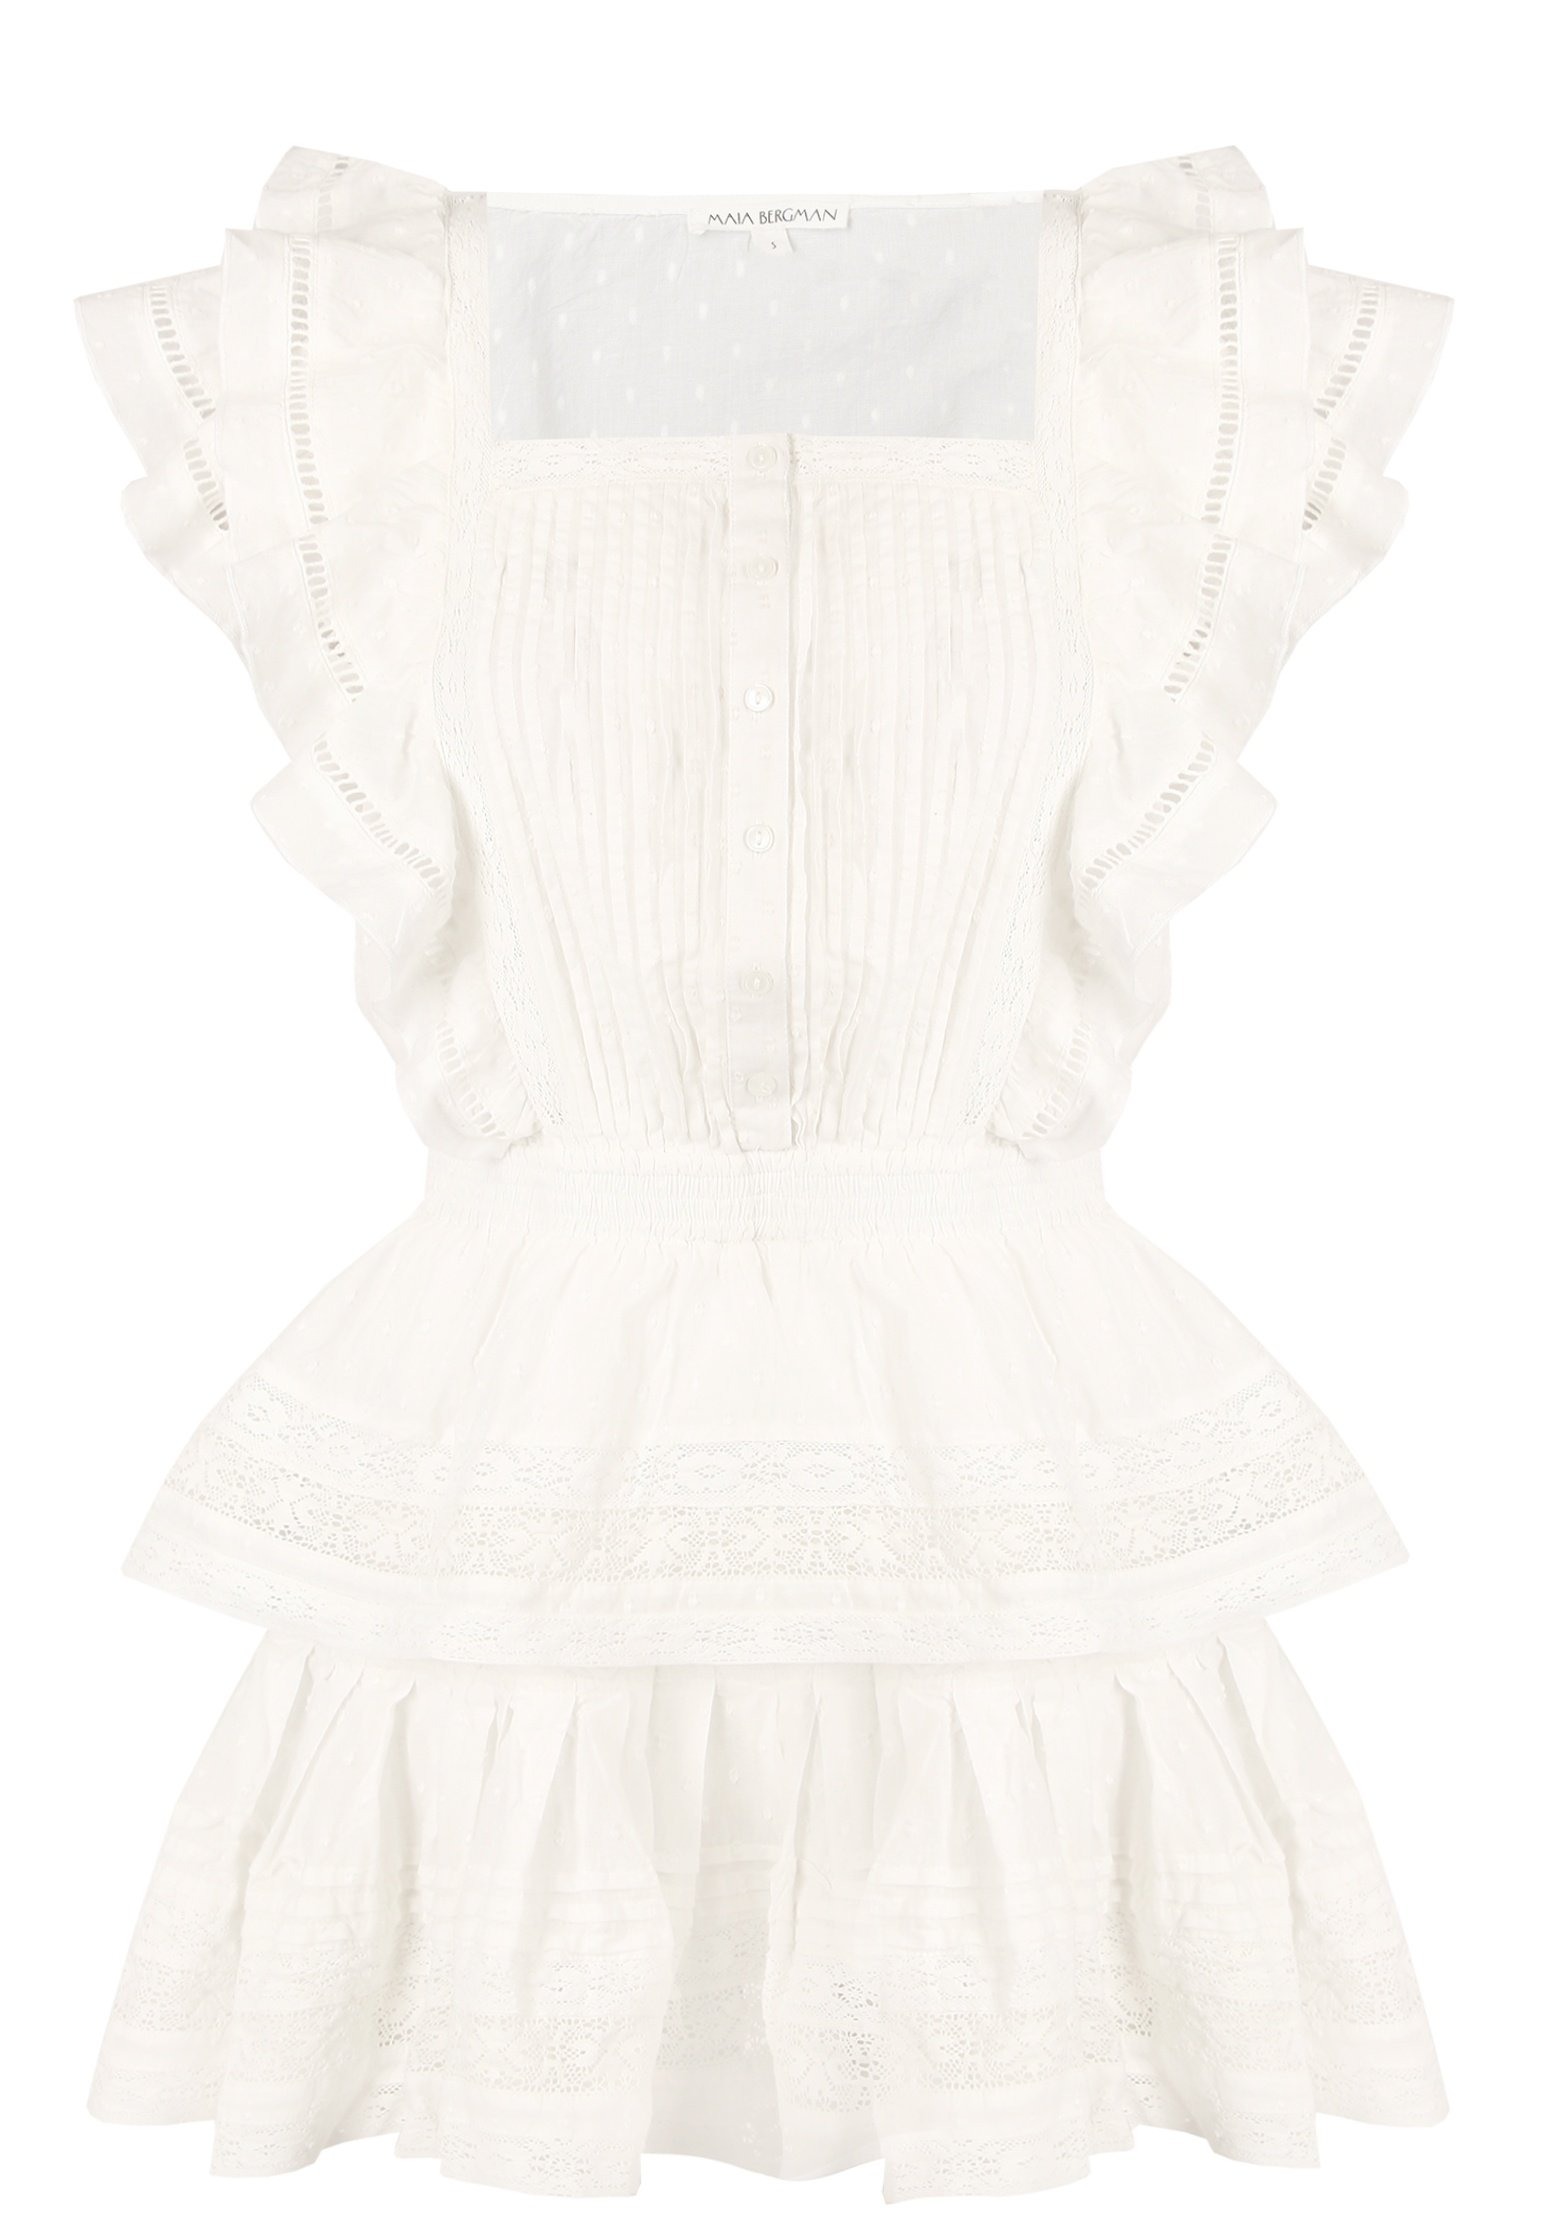 Dress MAIA BERGMAN Color: white (Code: 1029) in online store Allure